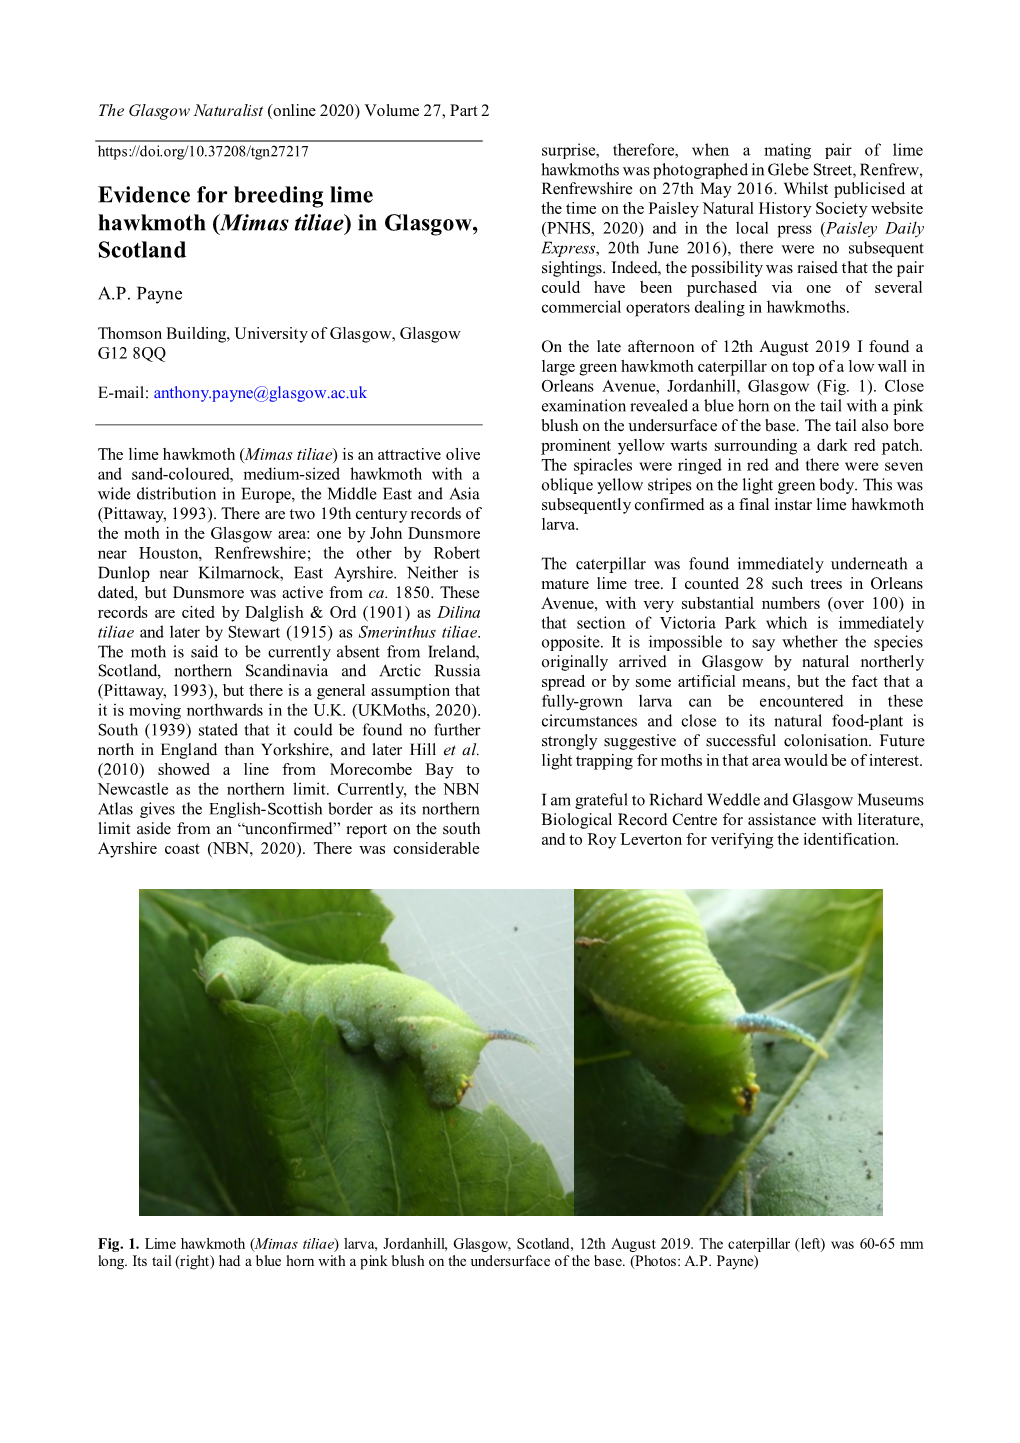 Evidence for Breeding Lime Hawkmoth (Mimas Tiliae) in Glasgow, Scotland